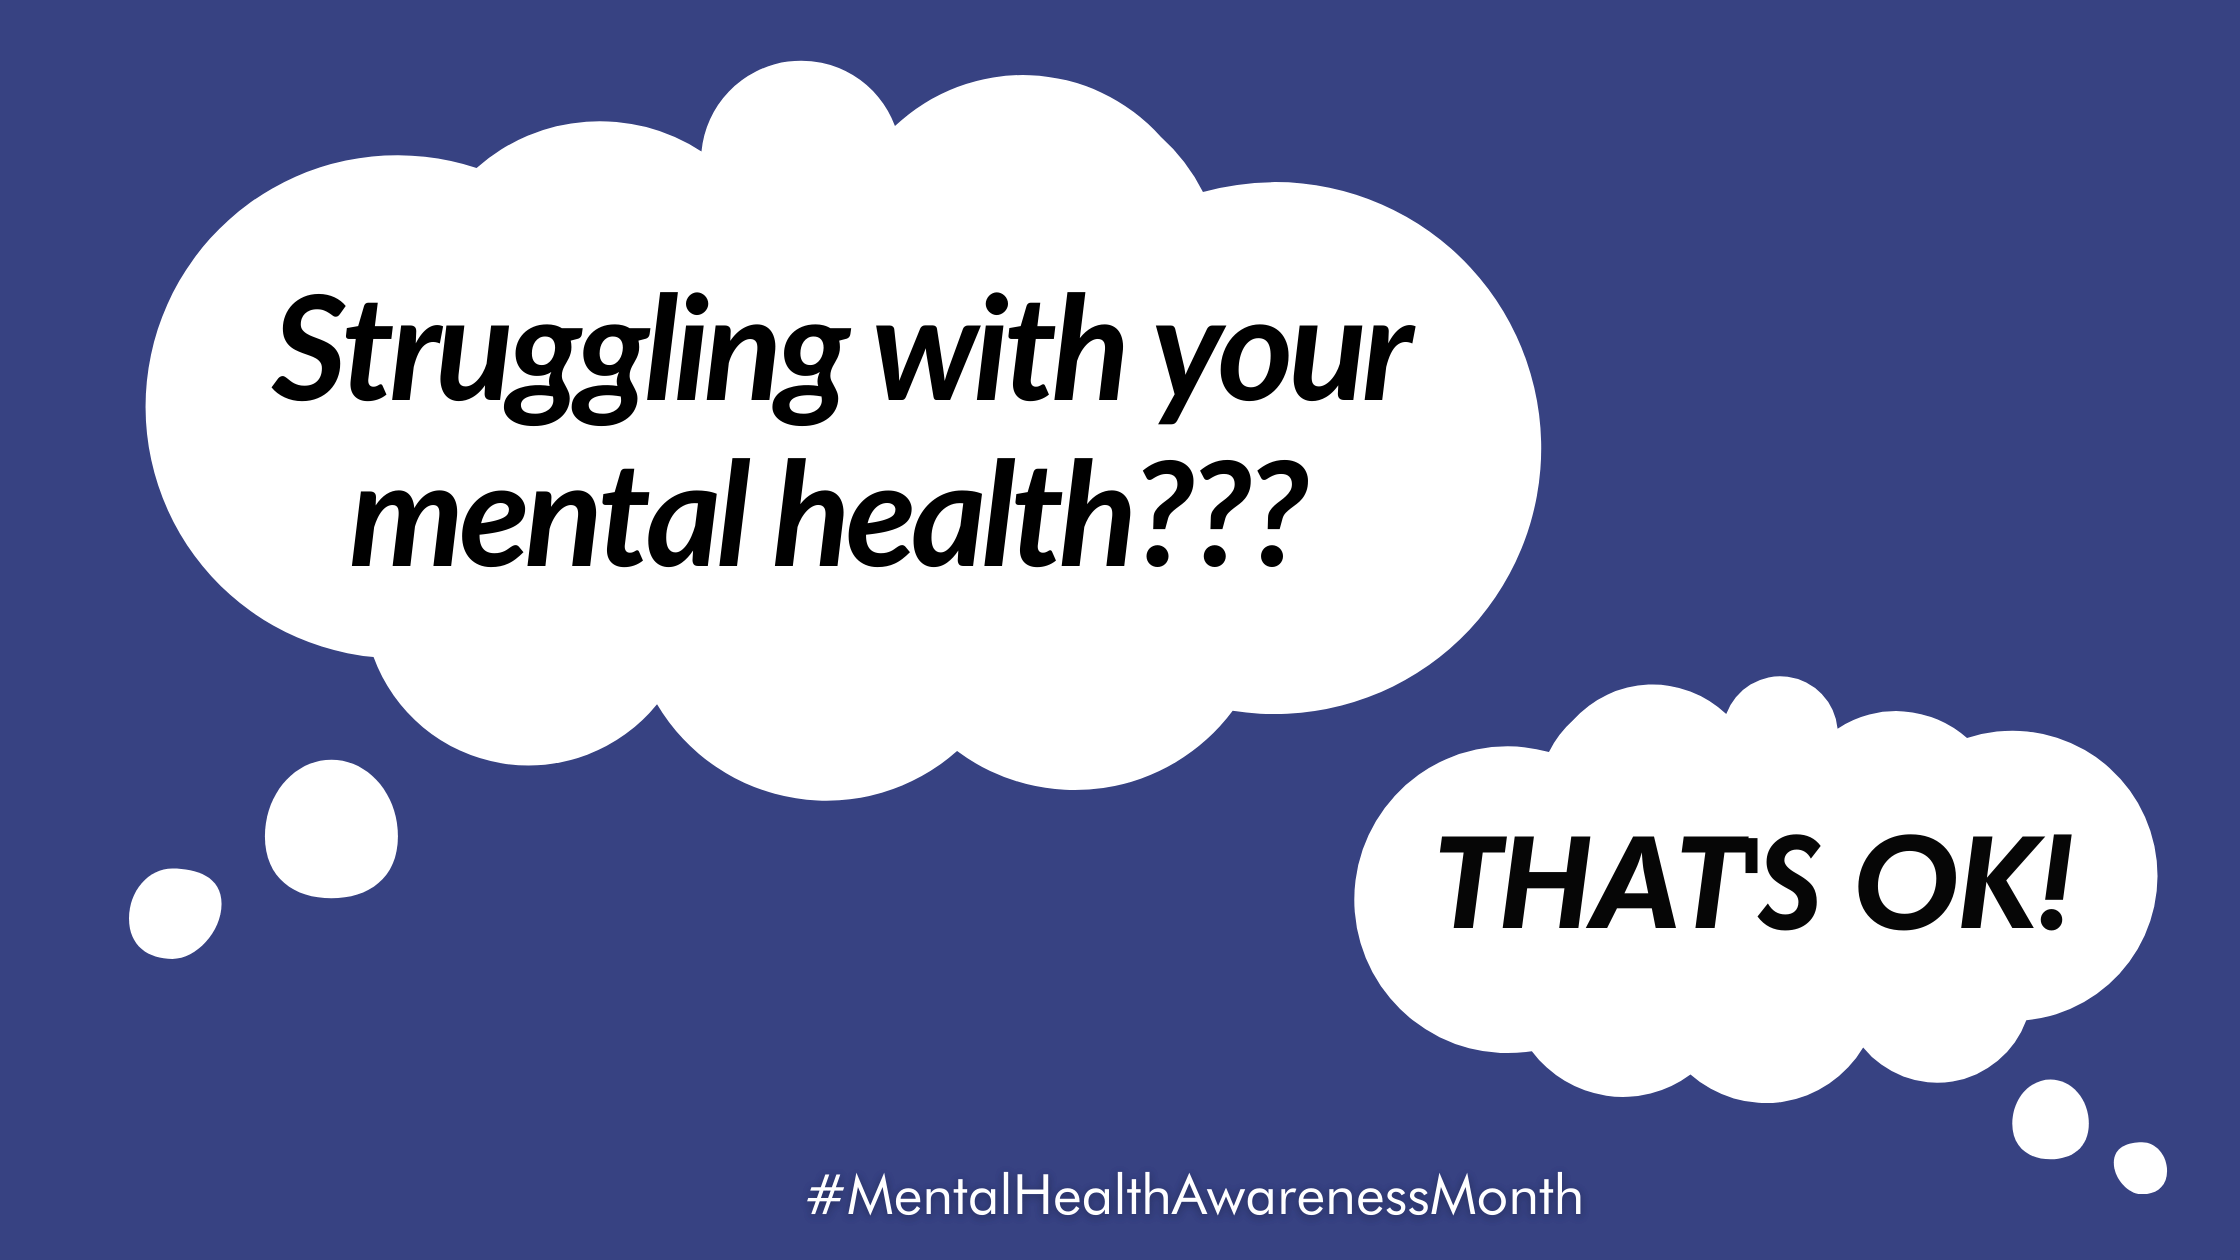 It's Mental Health Awareness Month!